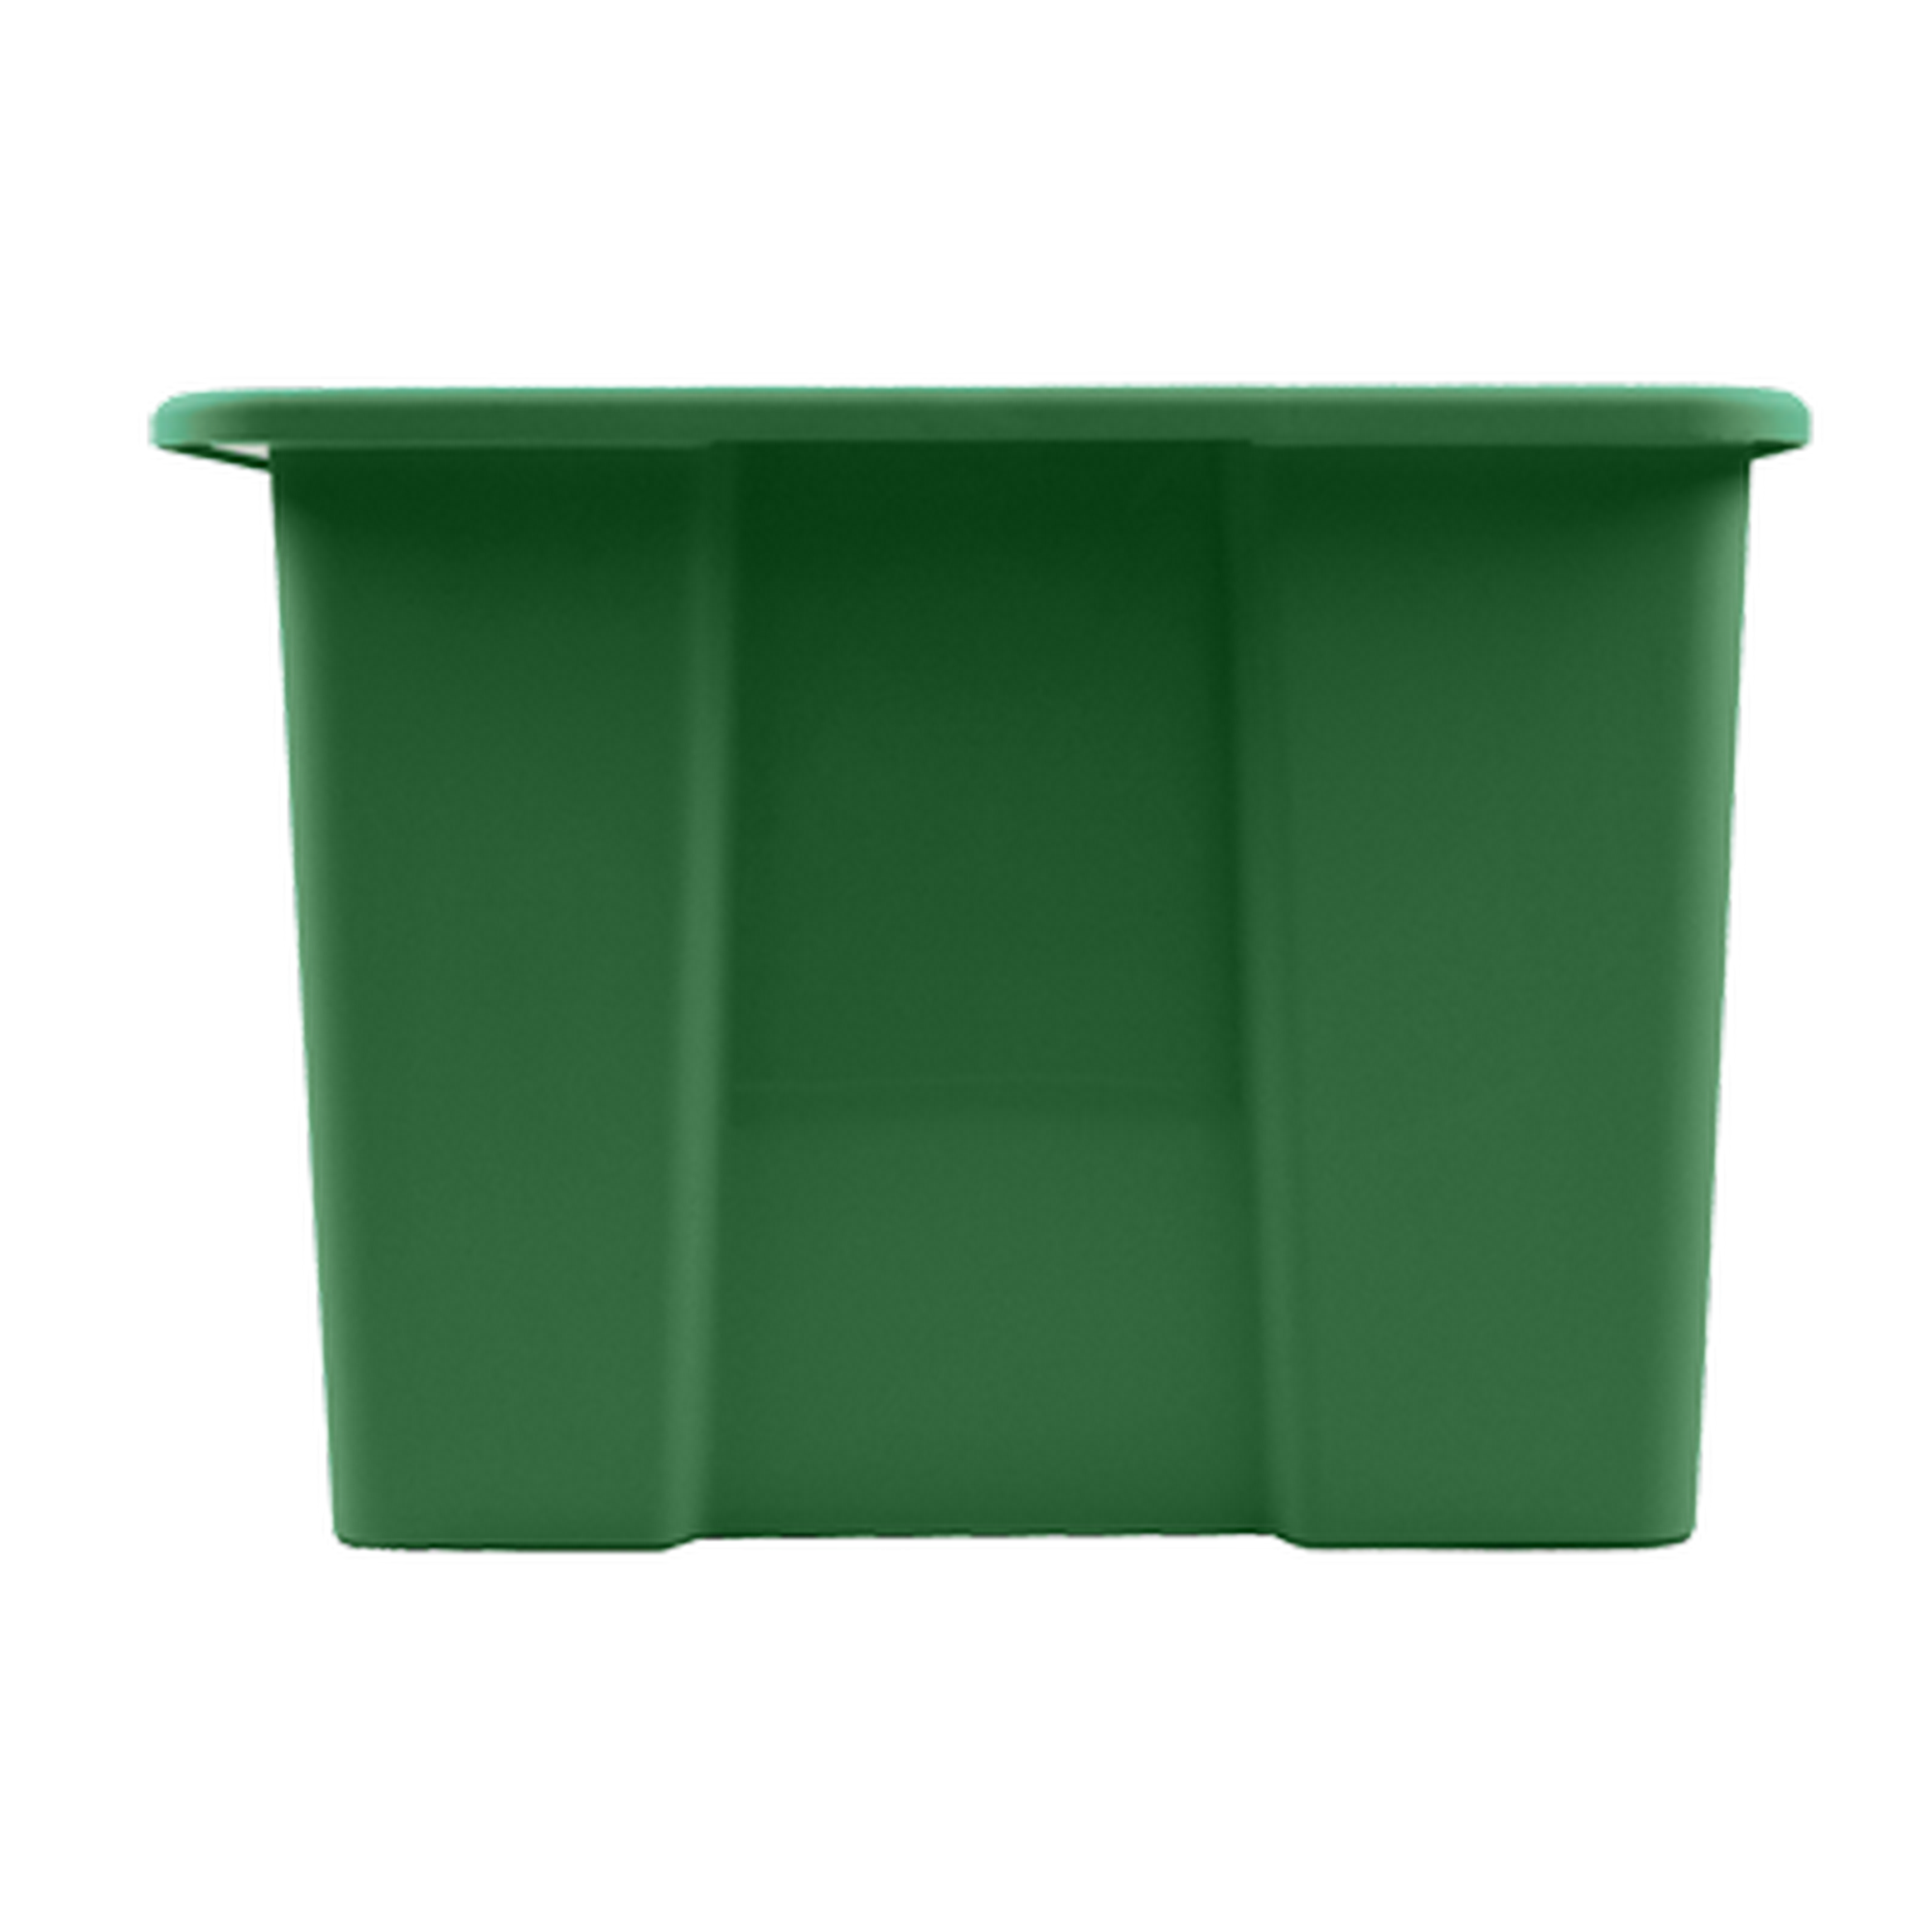 Aufbewahrungsbox 'Unibox' grün 47 x 35 x 25 cm, 30 l + product picture